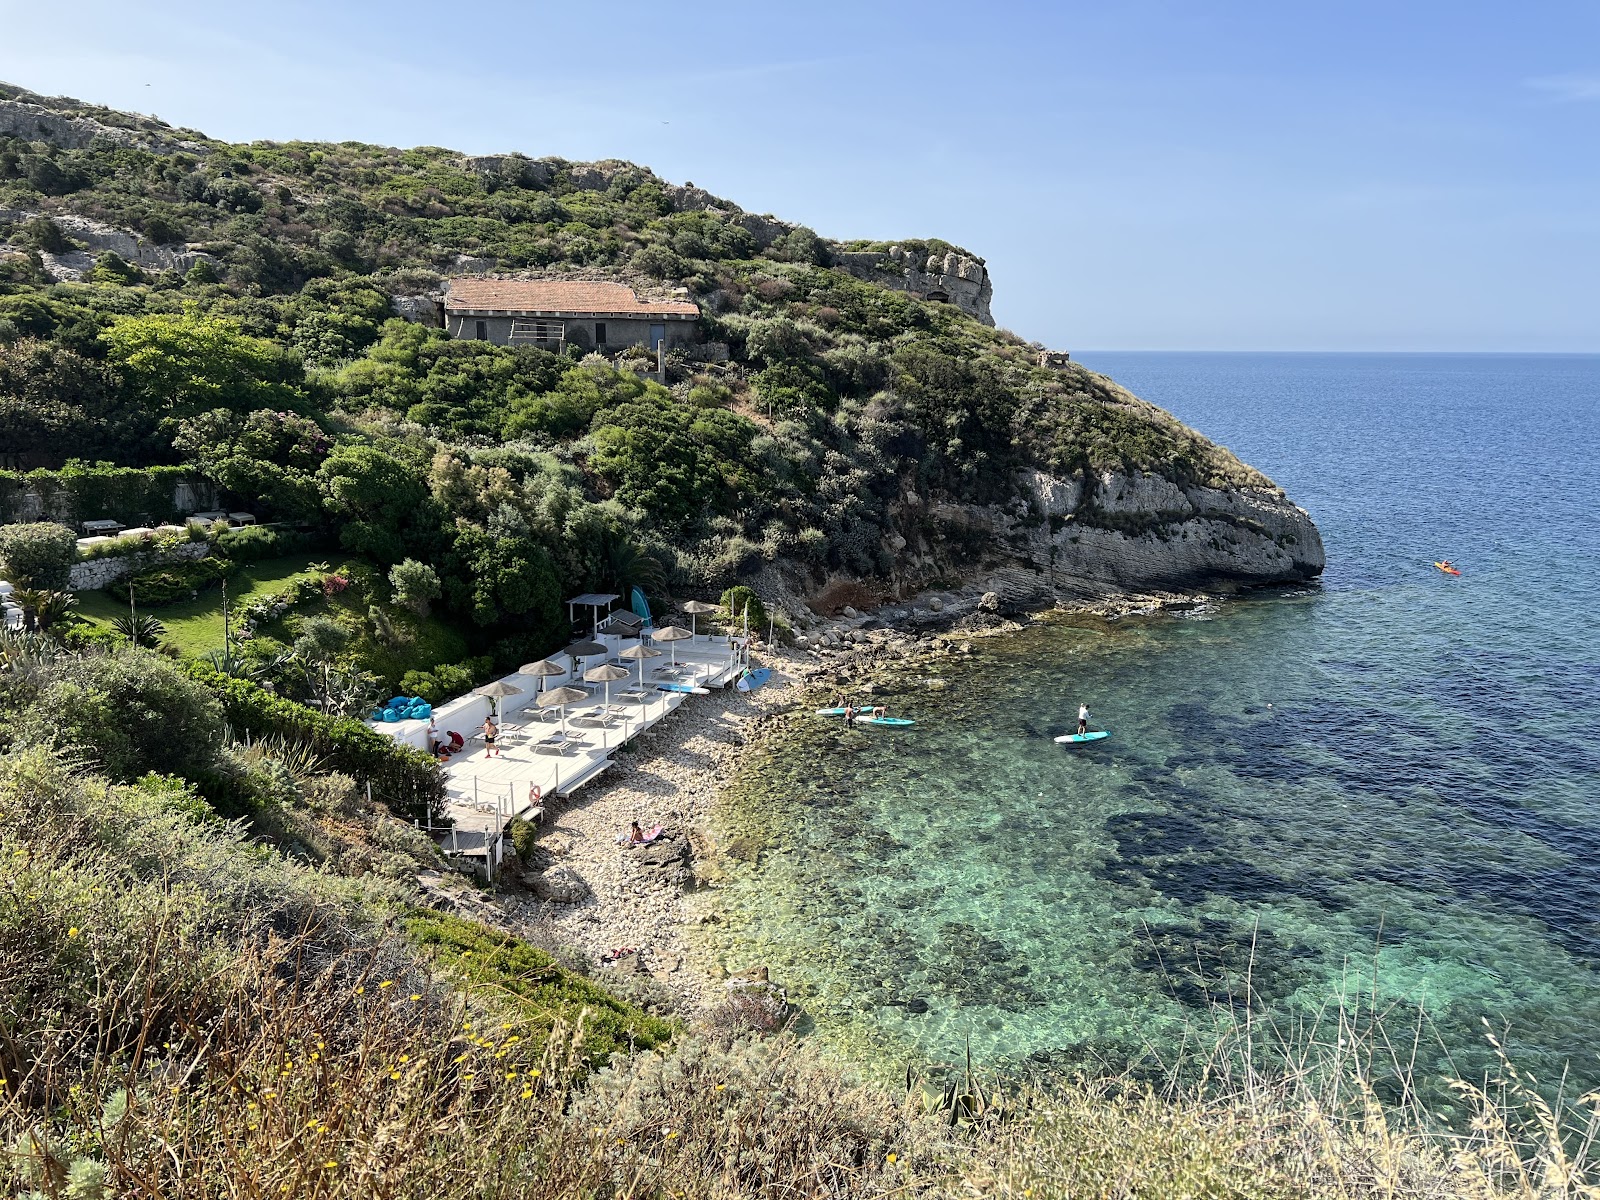 Fotografija Spiaggia Cala Murr'e Porcu z kamni površino